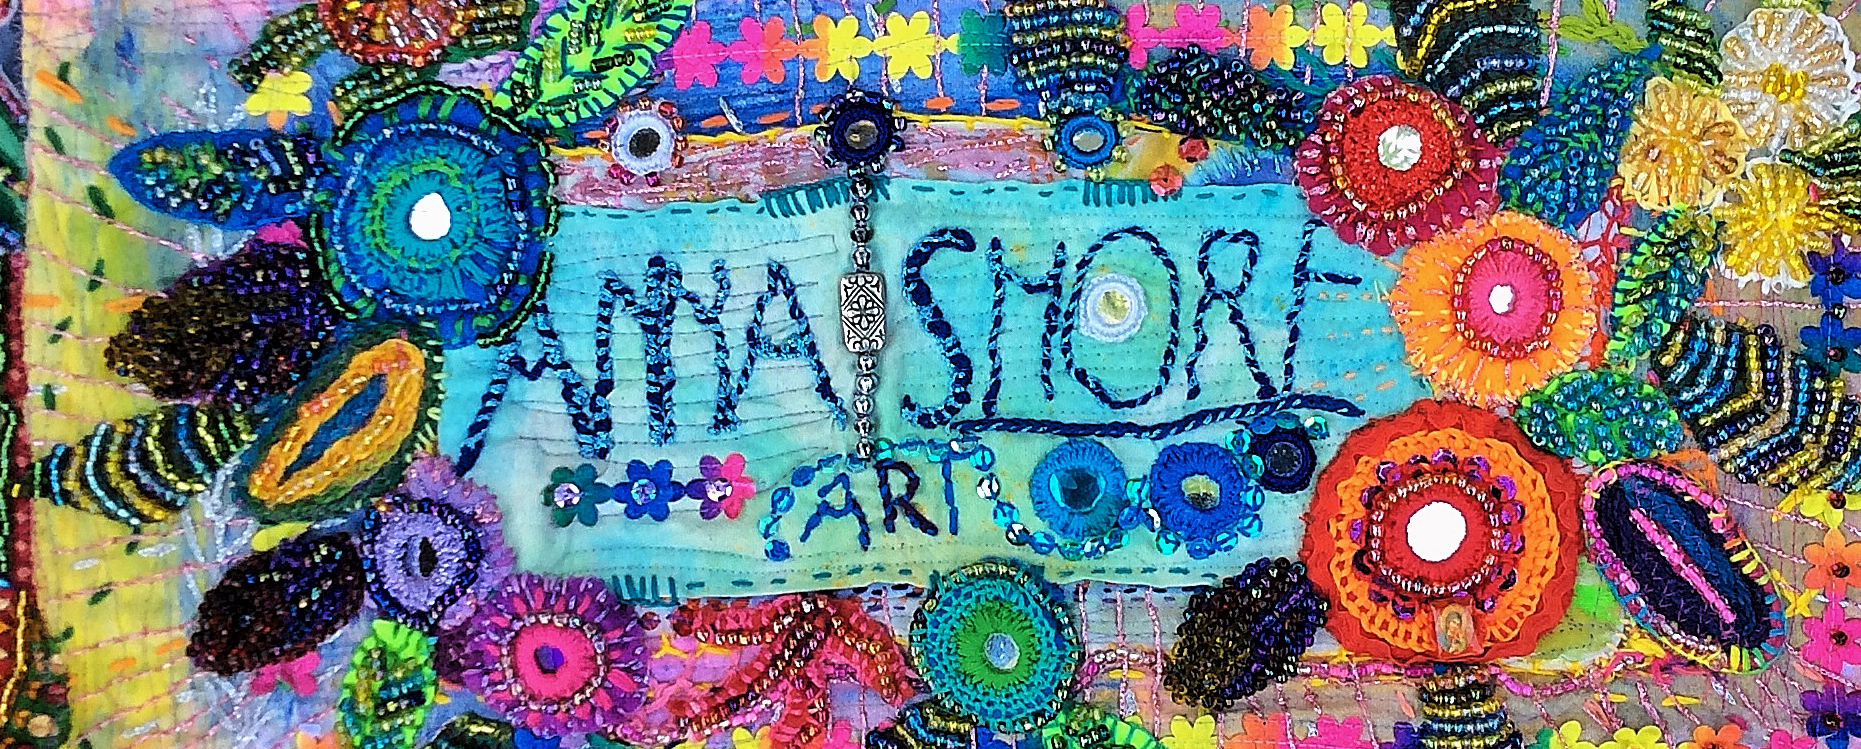 Anna Shore Art decorative banner